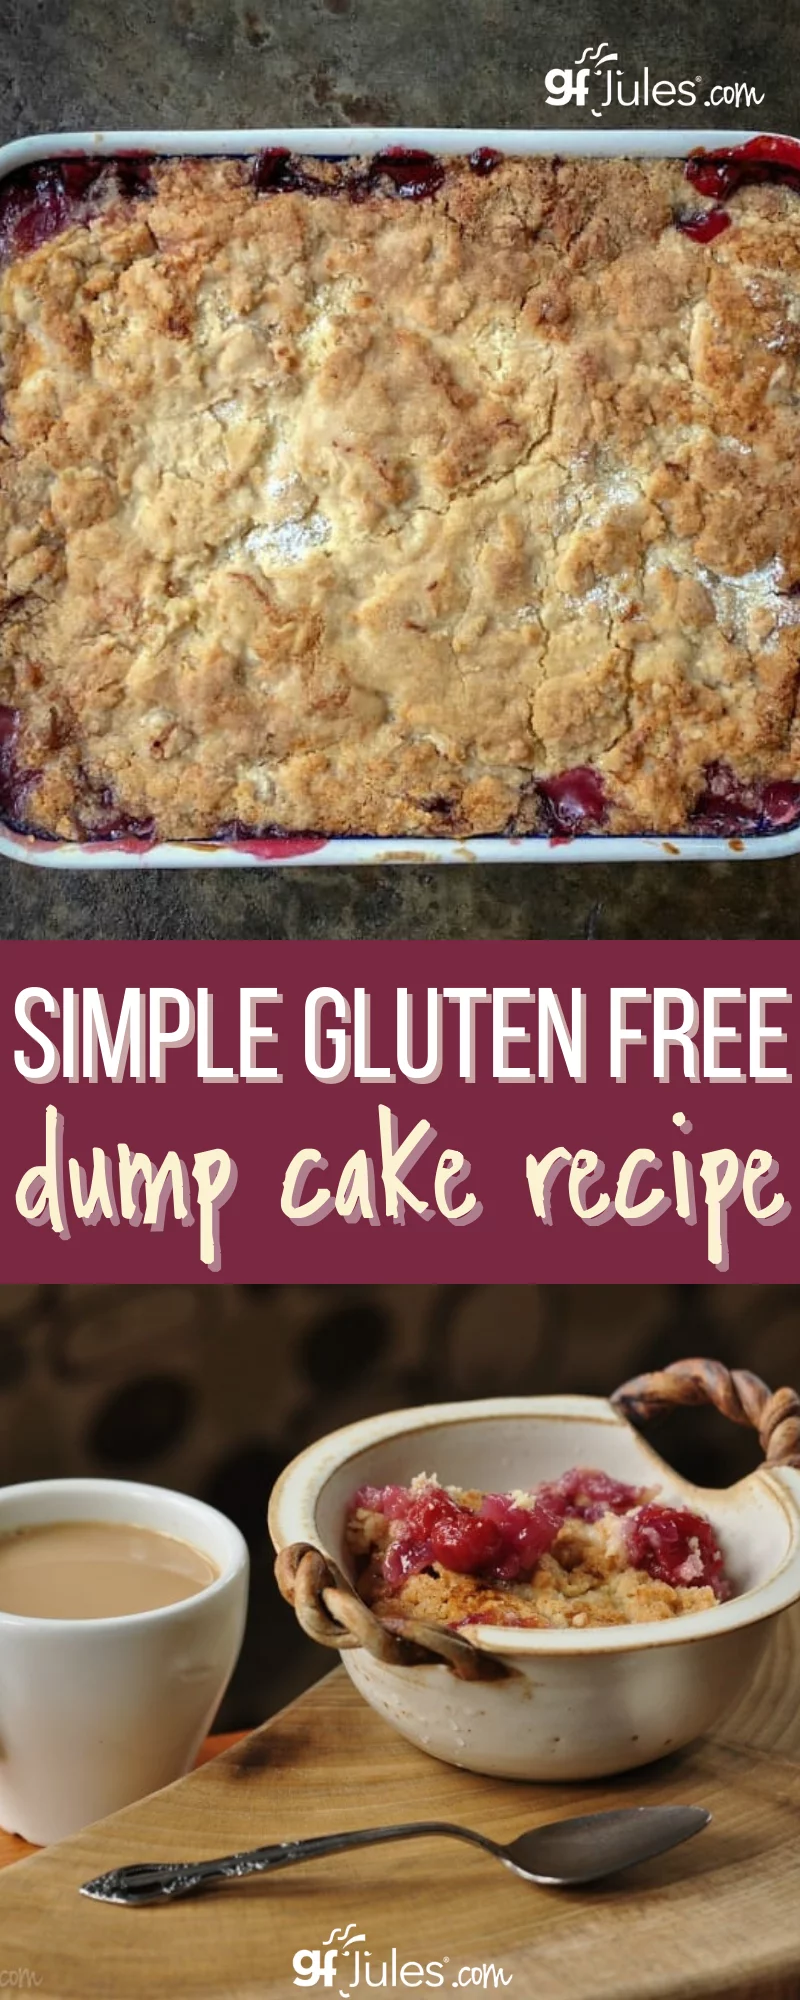 Simple Gluten Free Dump Cake Recipe